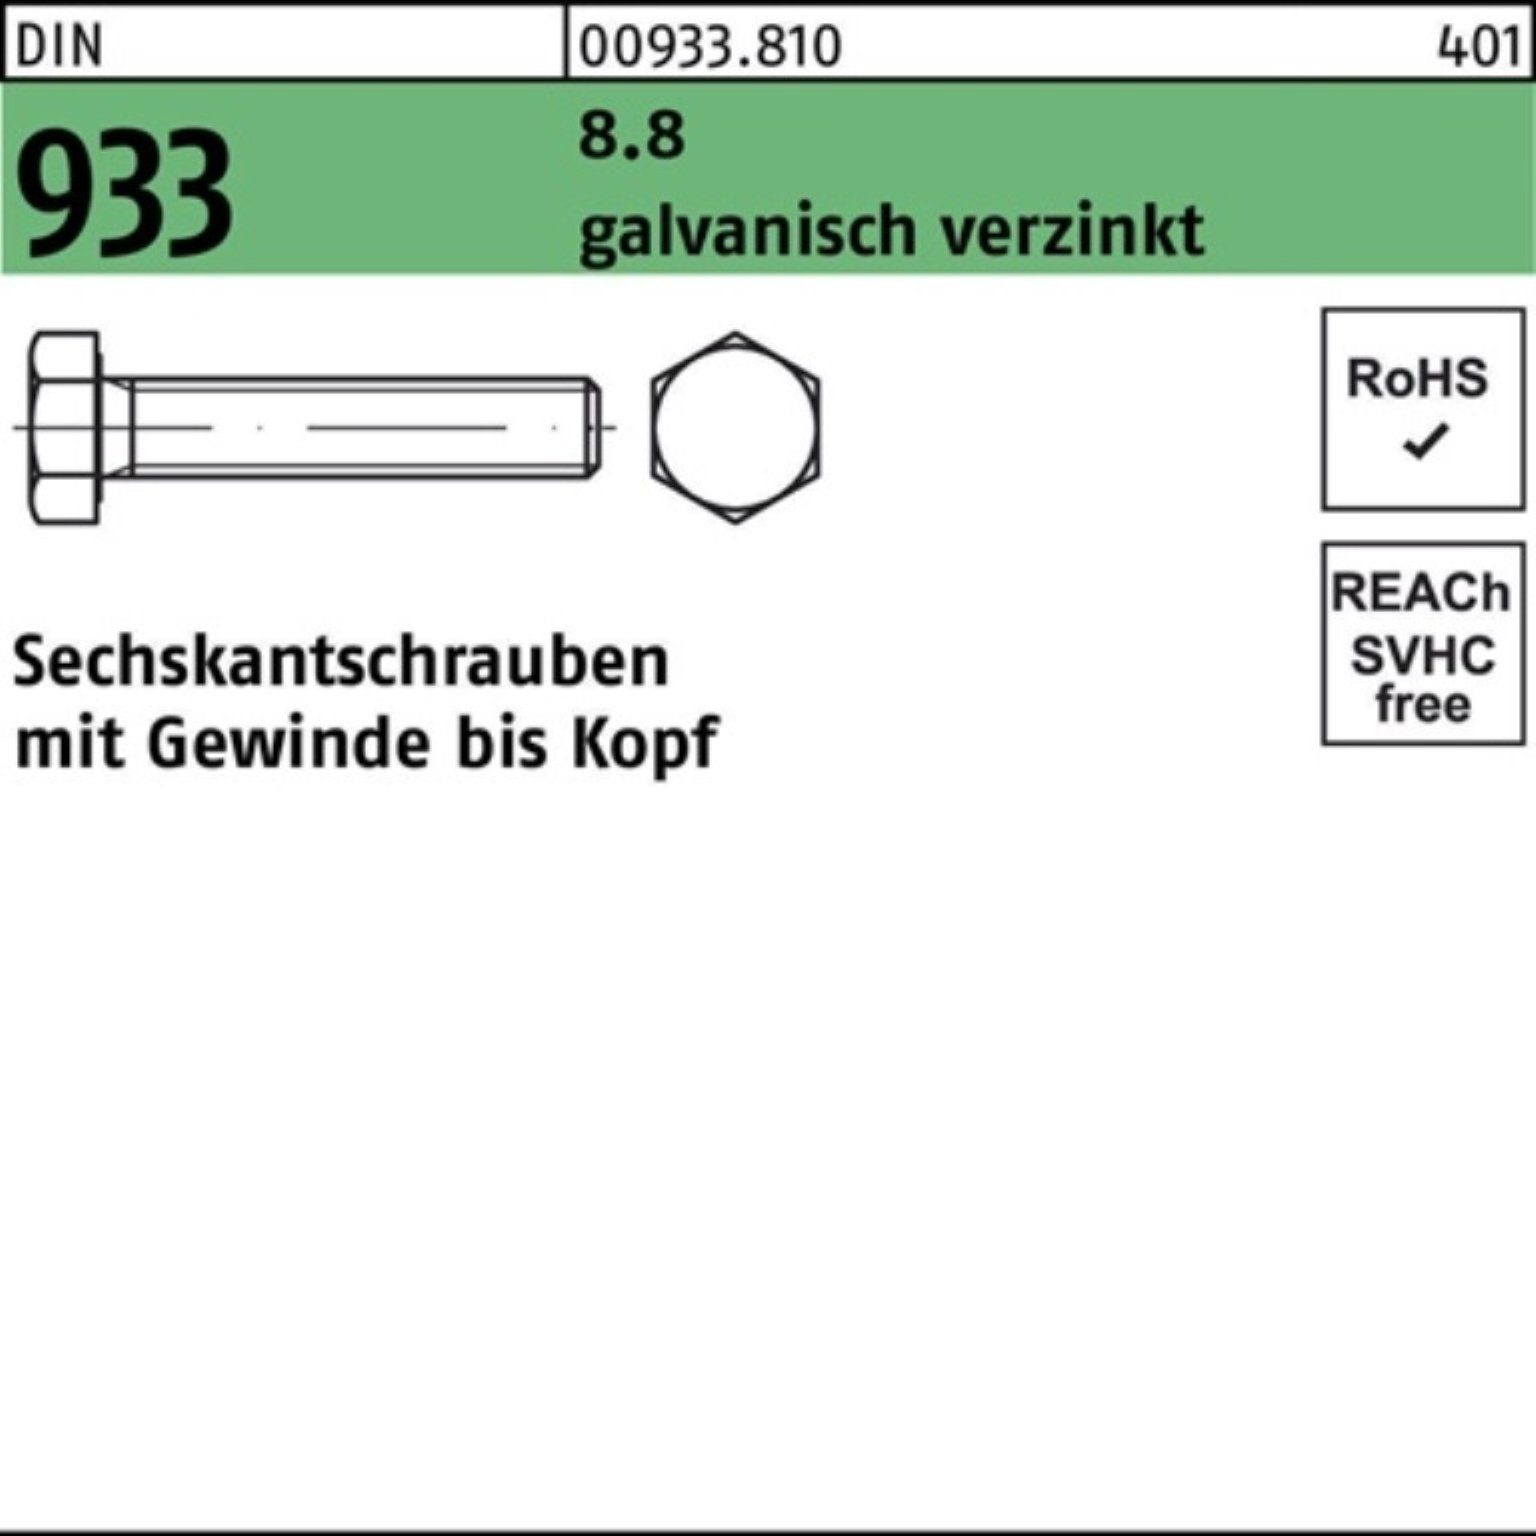 M20x VG Stü 100er Pack Reyher 8.8 240 DIN galv.verz. Sechskantschraube 933 1 Sechskantschraube